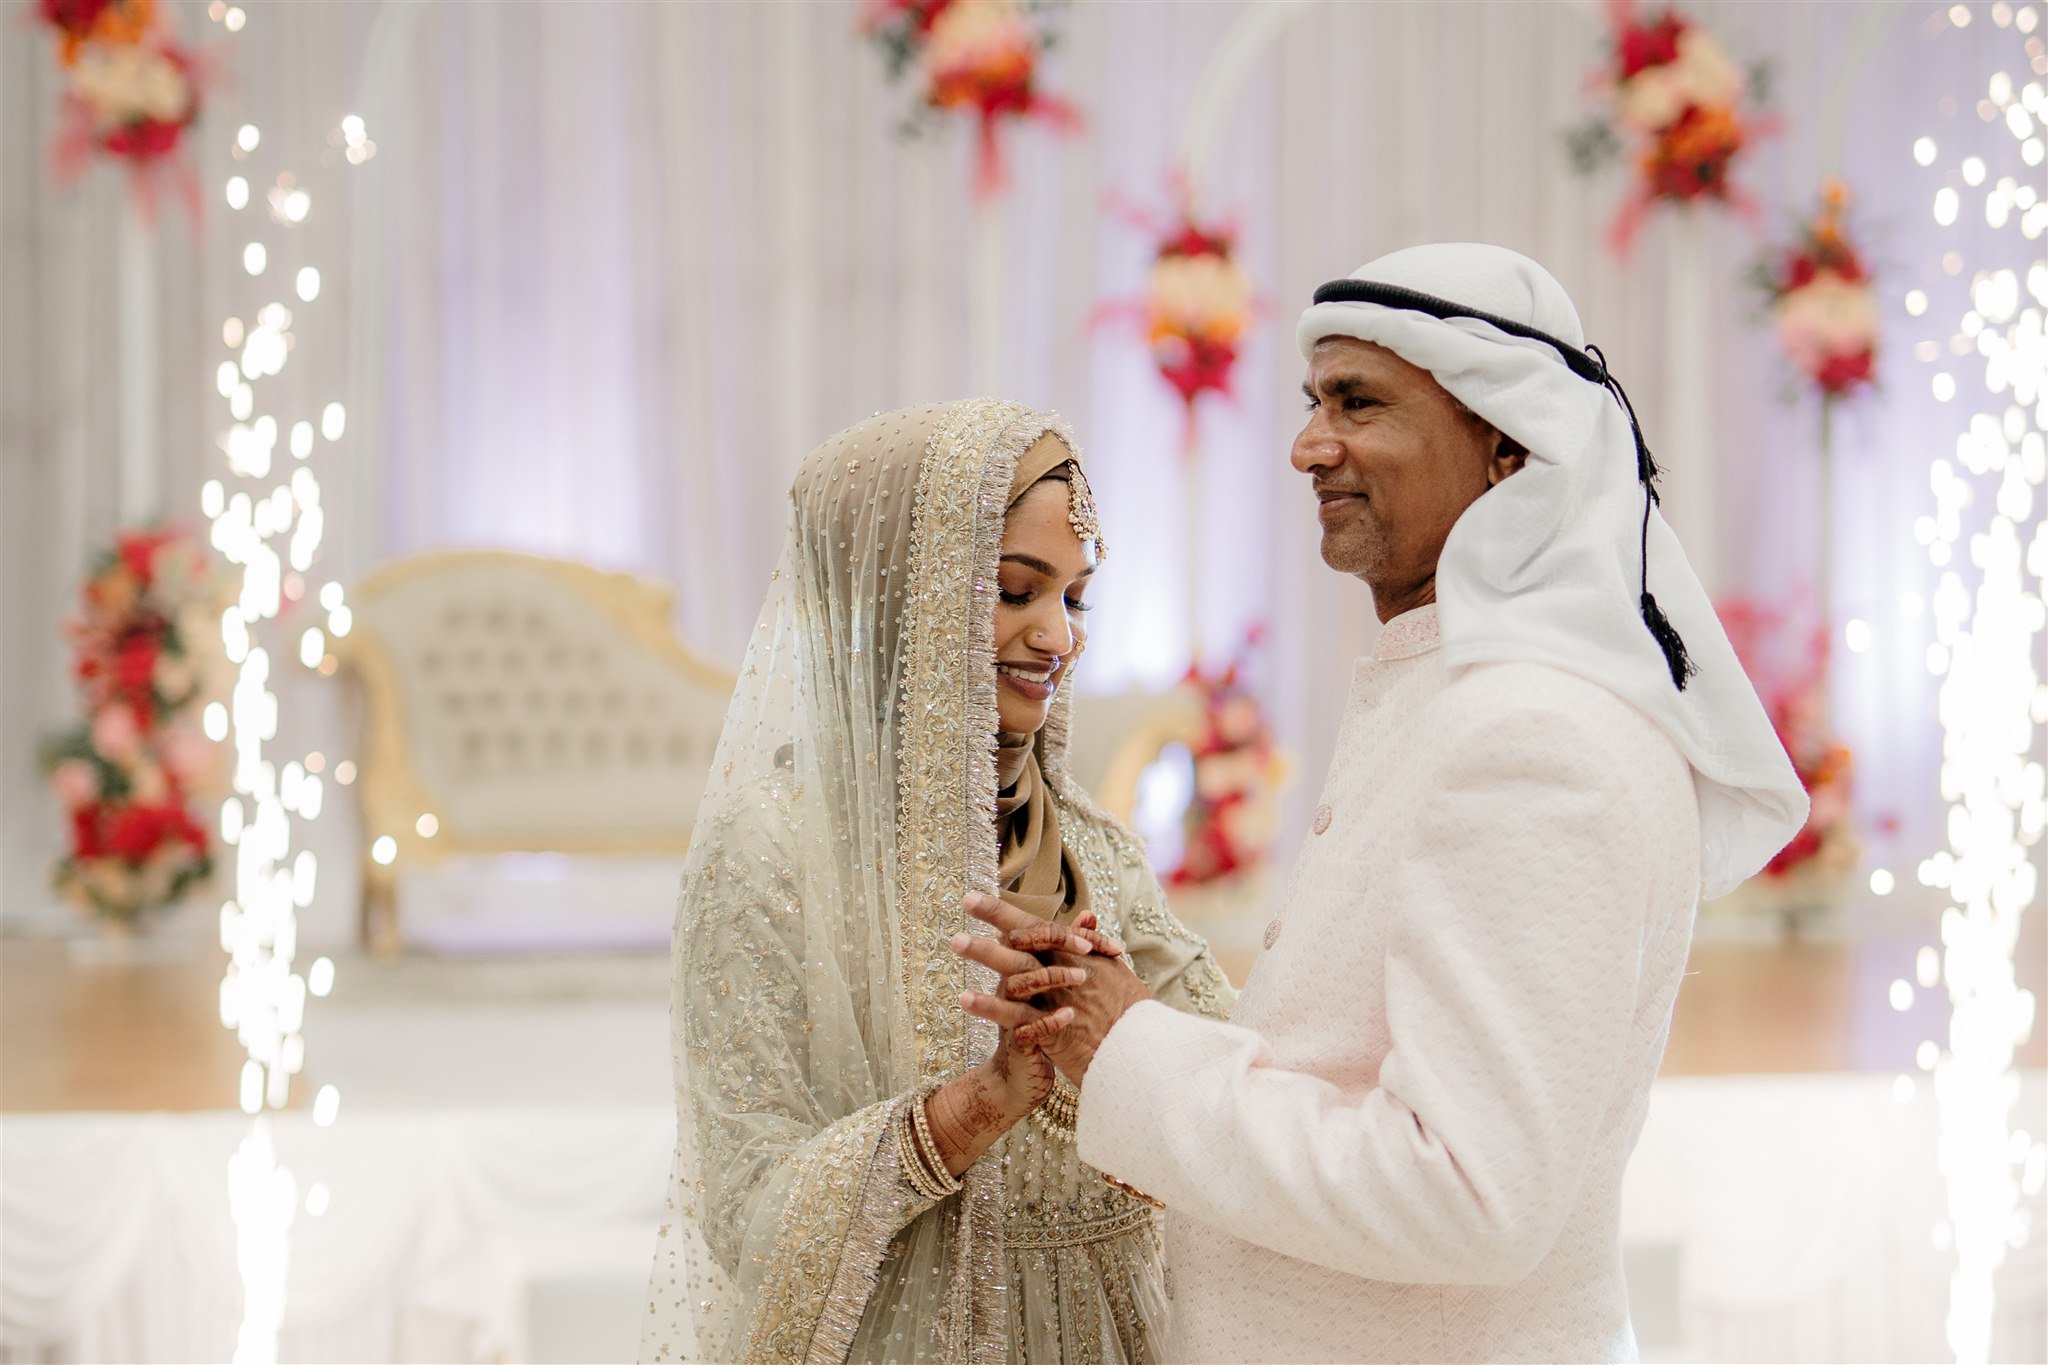 auckland-indian-muslim-wedding-nikkah-walima-indian-wedding-photographer-videographer-dear-white-productions75.jpg